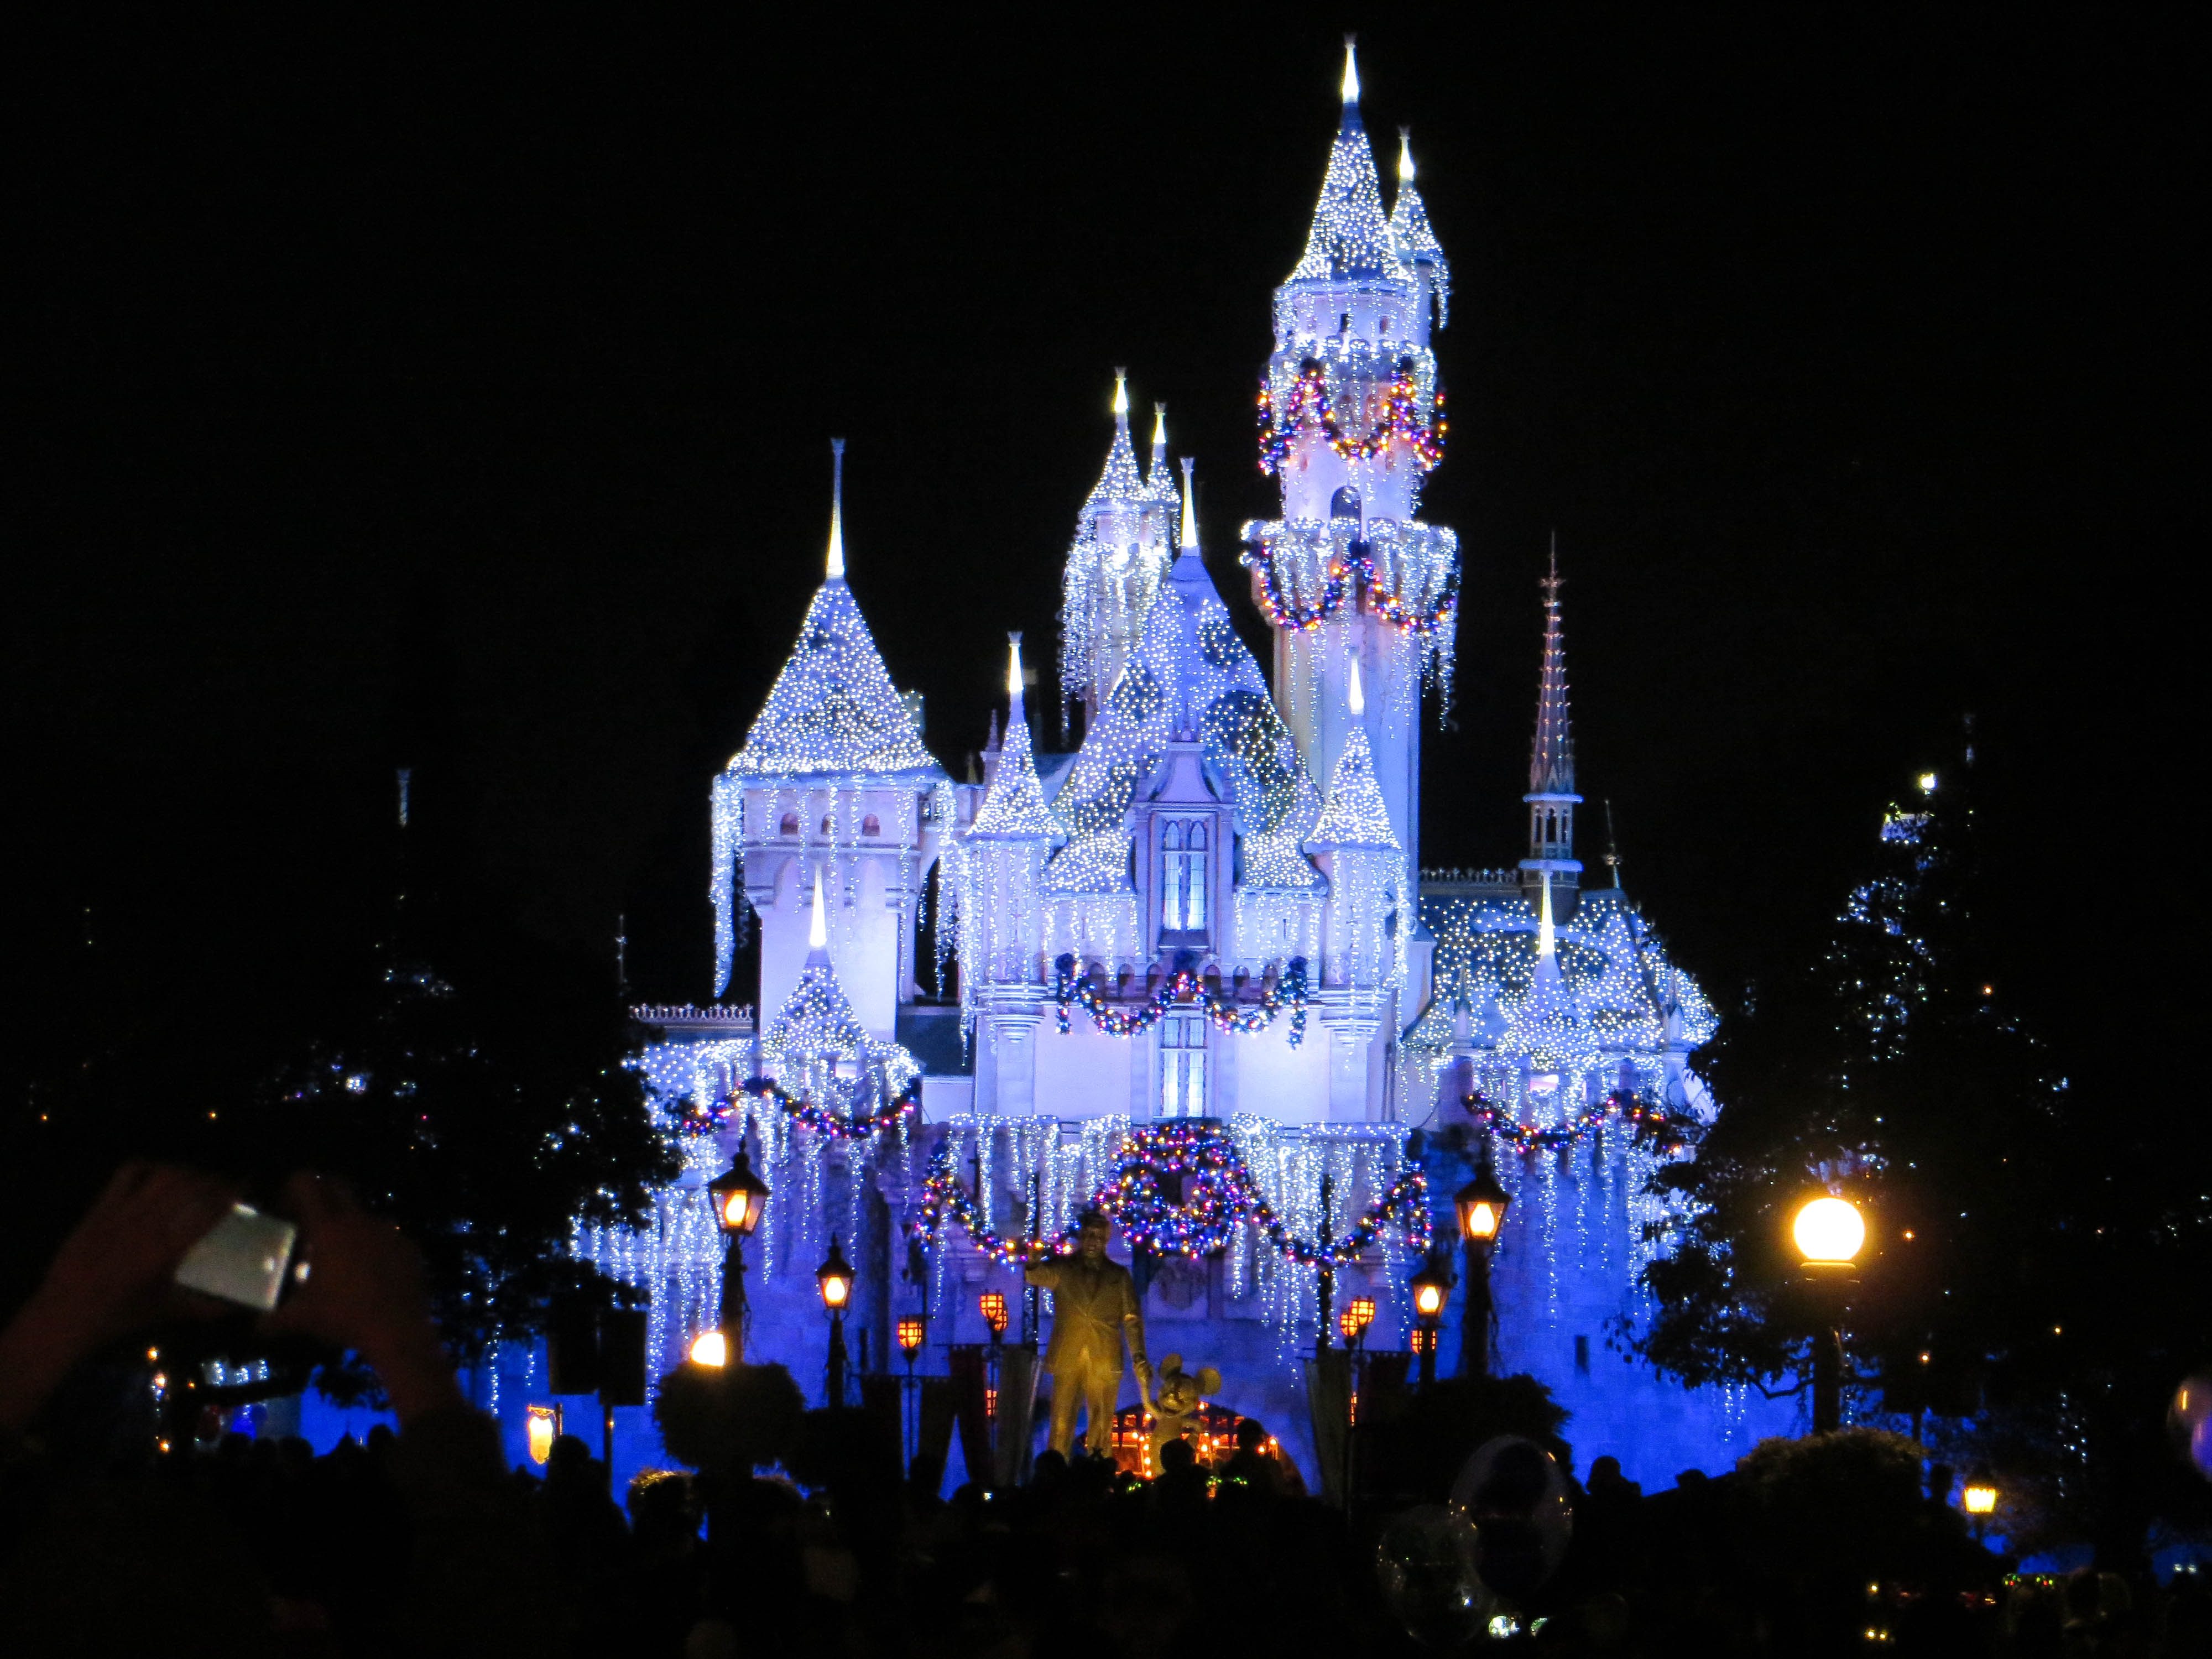 Disneyland Cinderella castle during the holidays